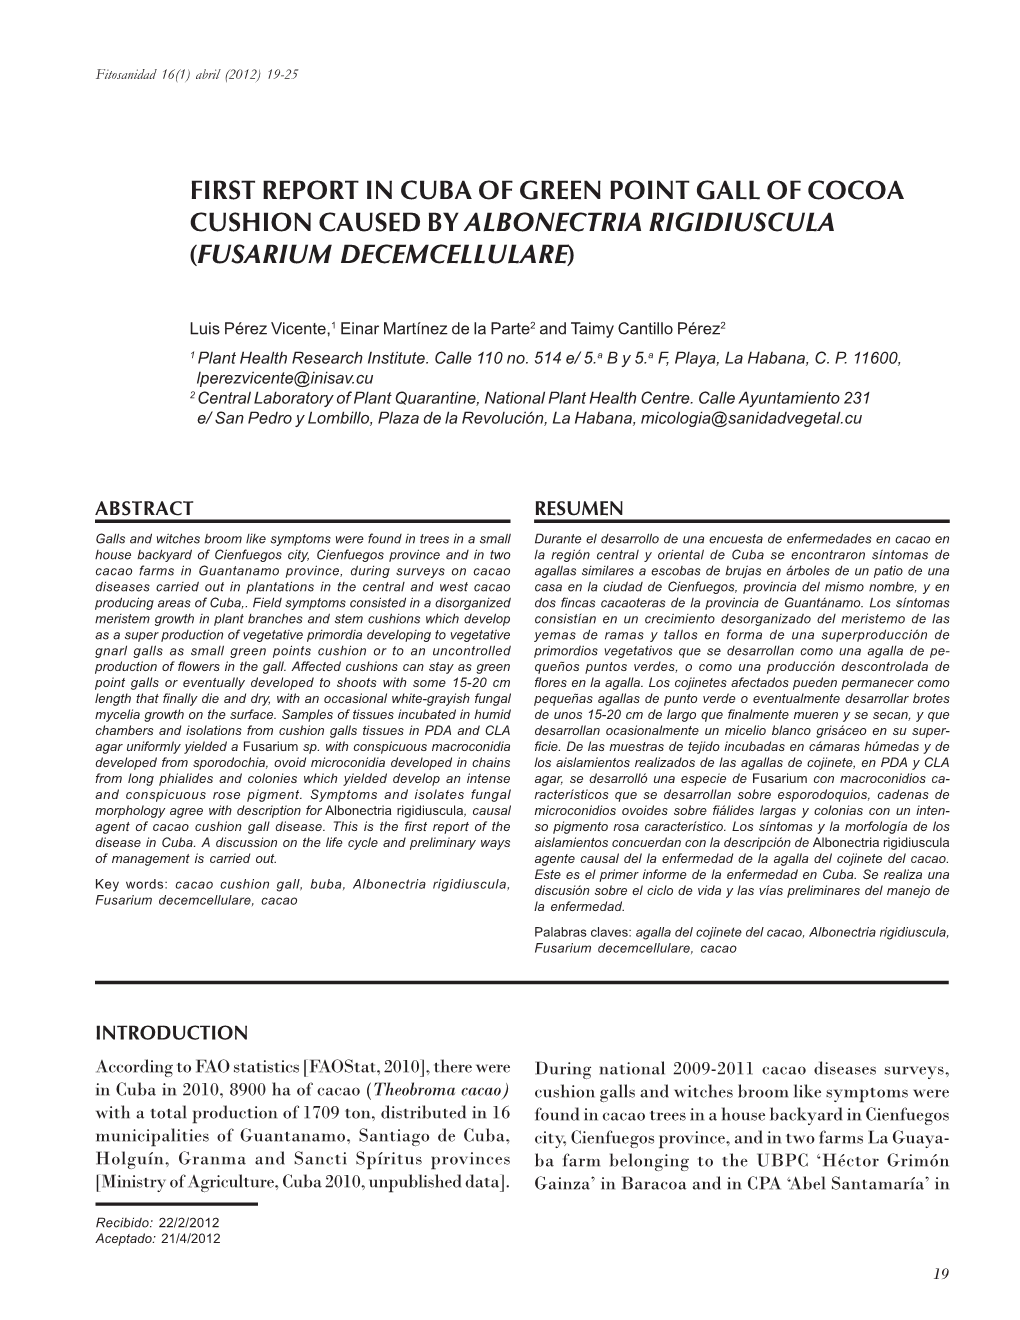 First Report in Cuba of Green Point Gall of Cocoa Cushion Caused by Albonectria Rigidiuscula (Fusarium Decemcellulare)